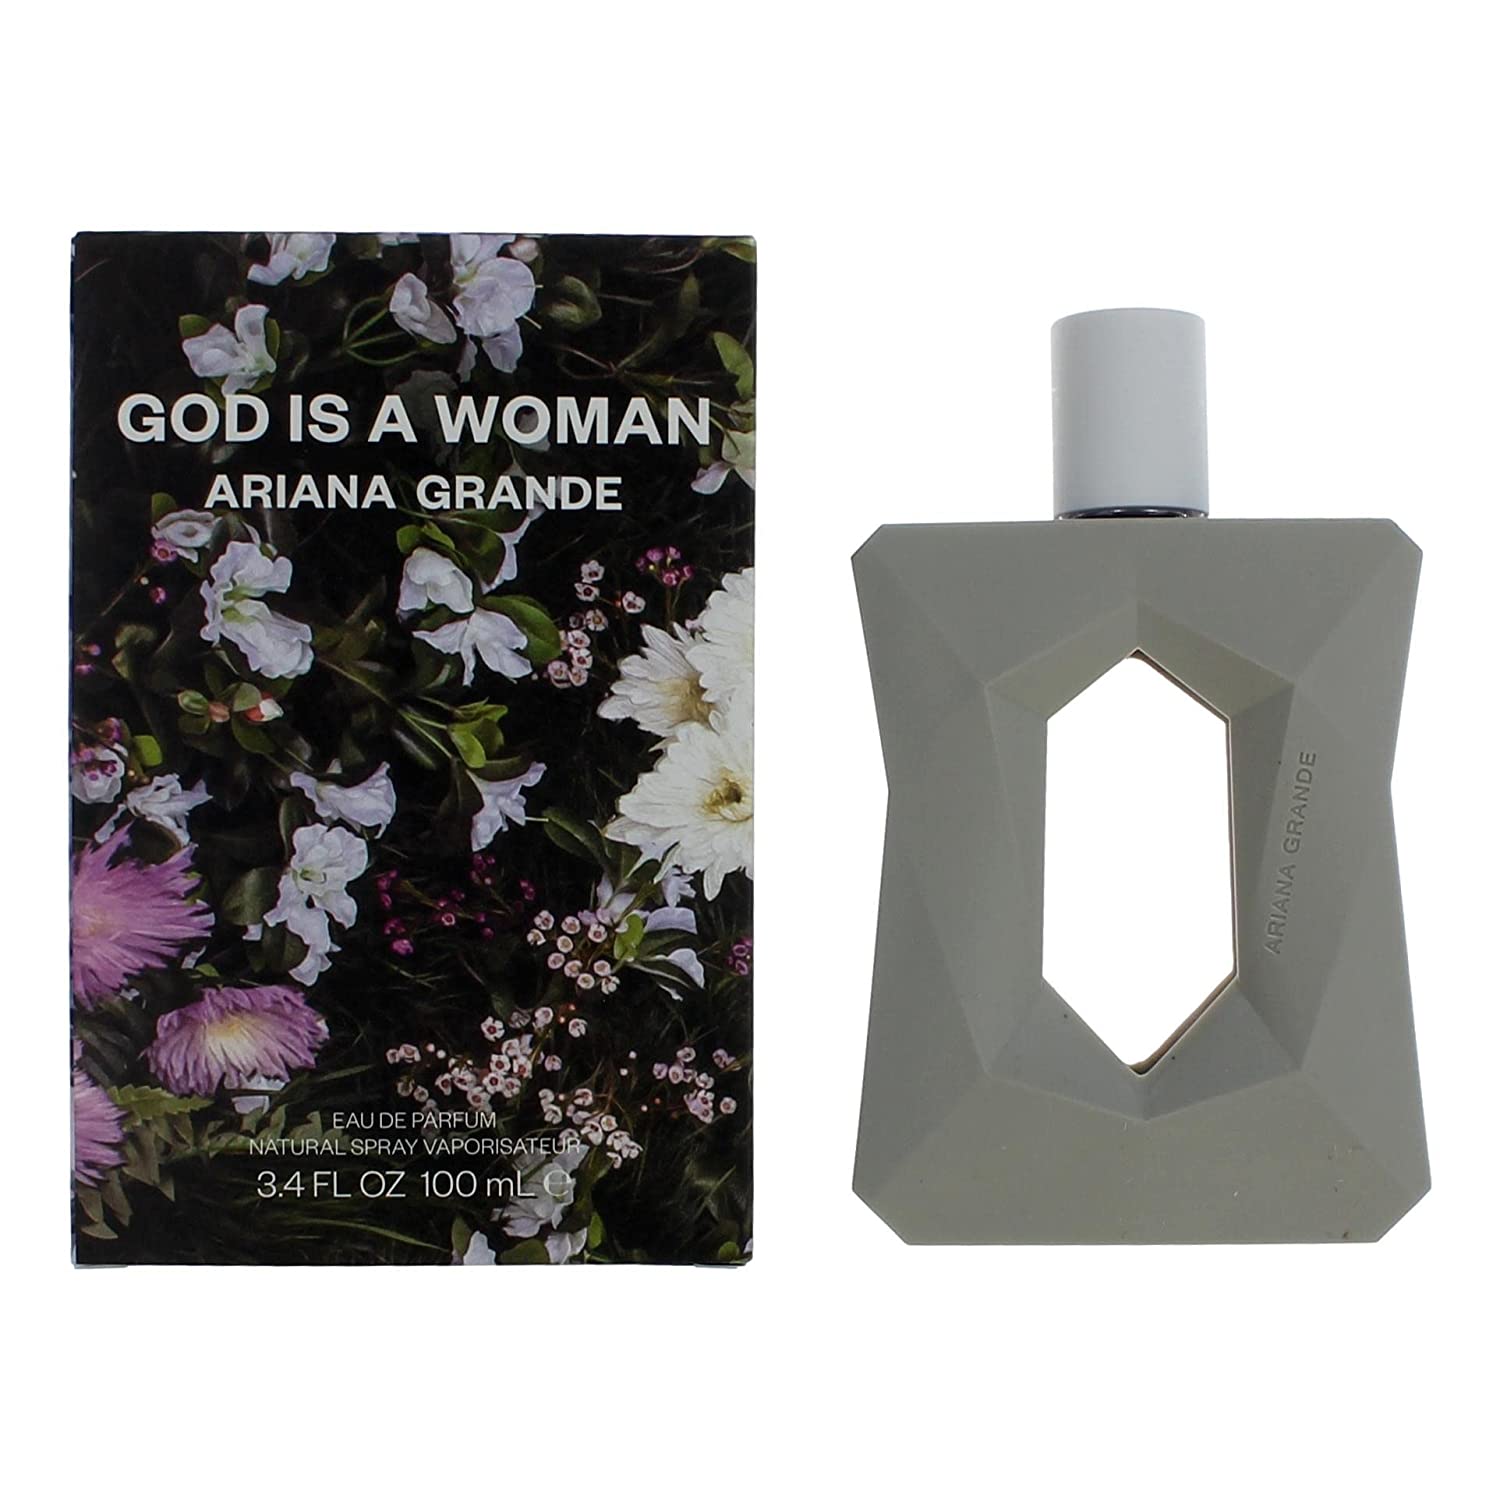 PERFUME for women god is a woman PERFUME eau de parfum spray cherish MOK 3.4 oz eau de parfum spray 